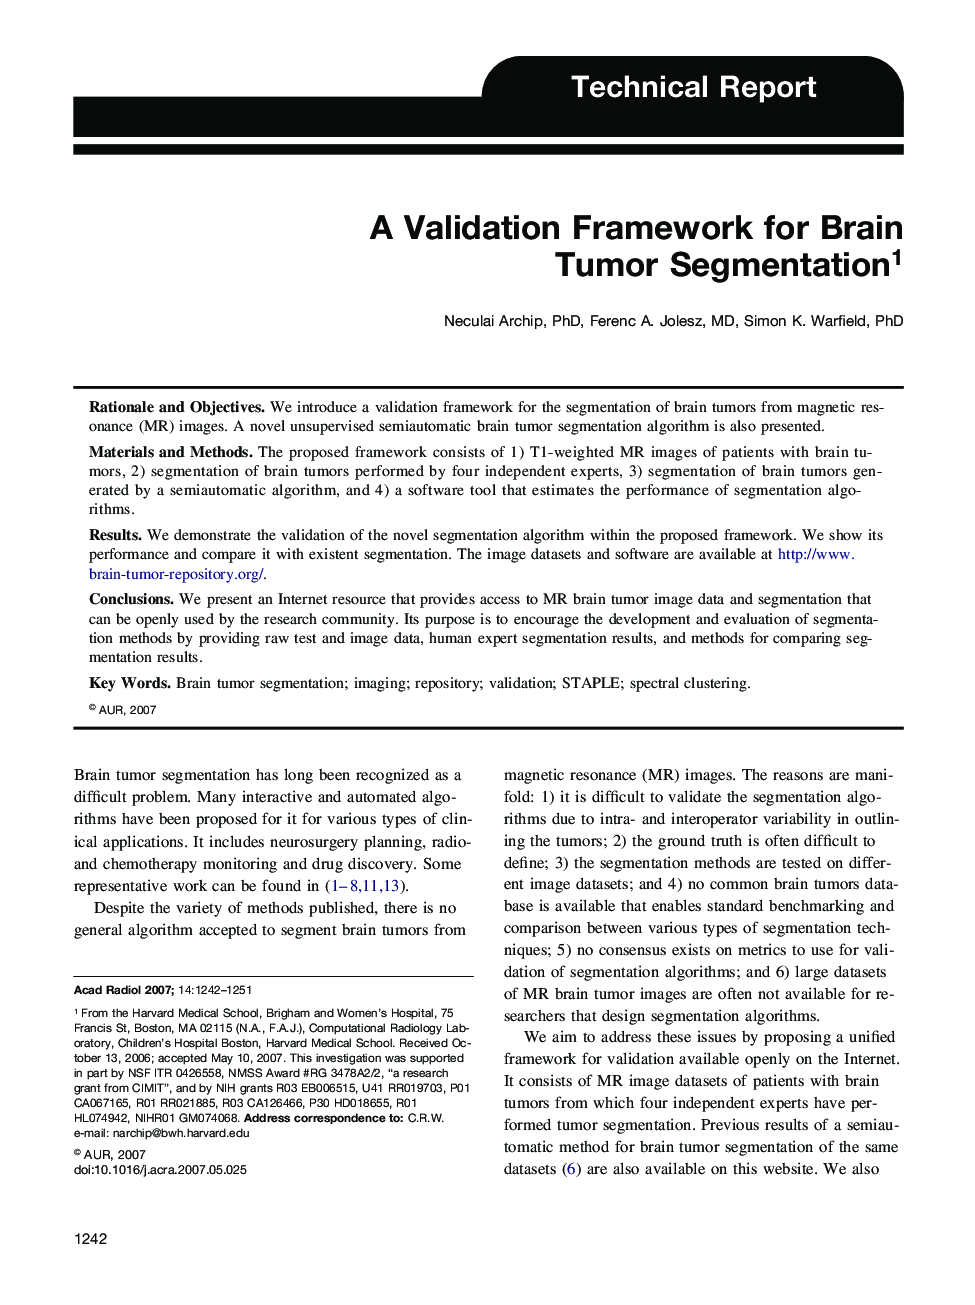 A Validation Framework for Brain Tumor Segmentation